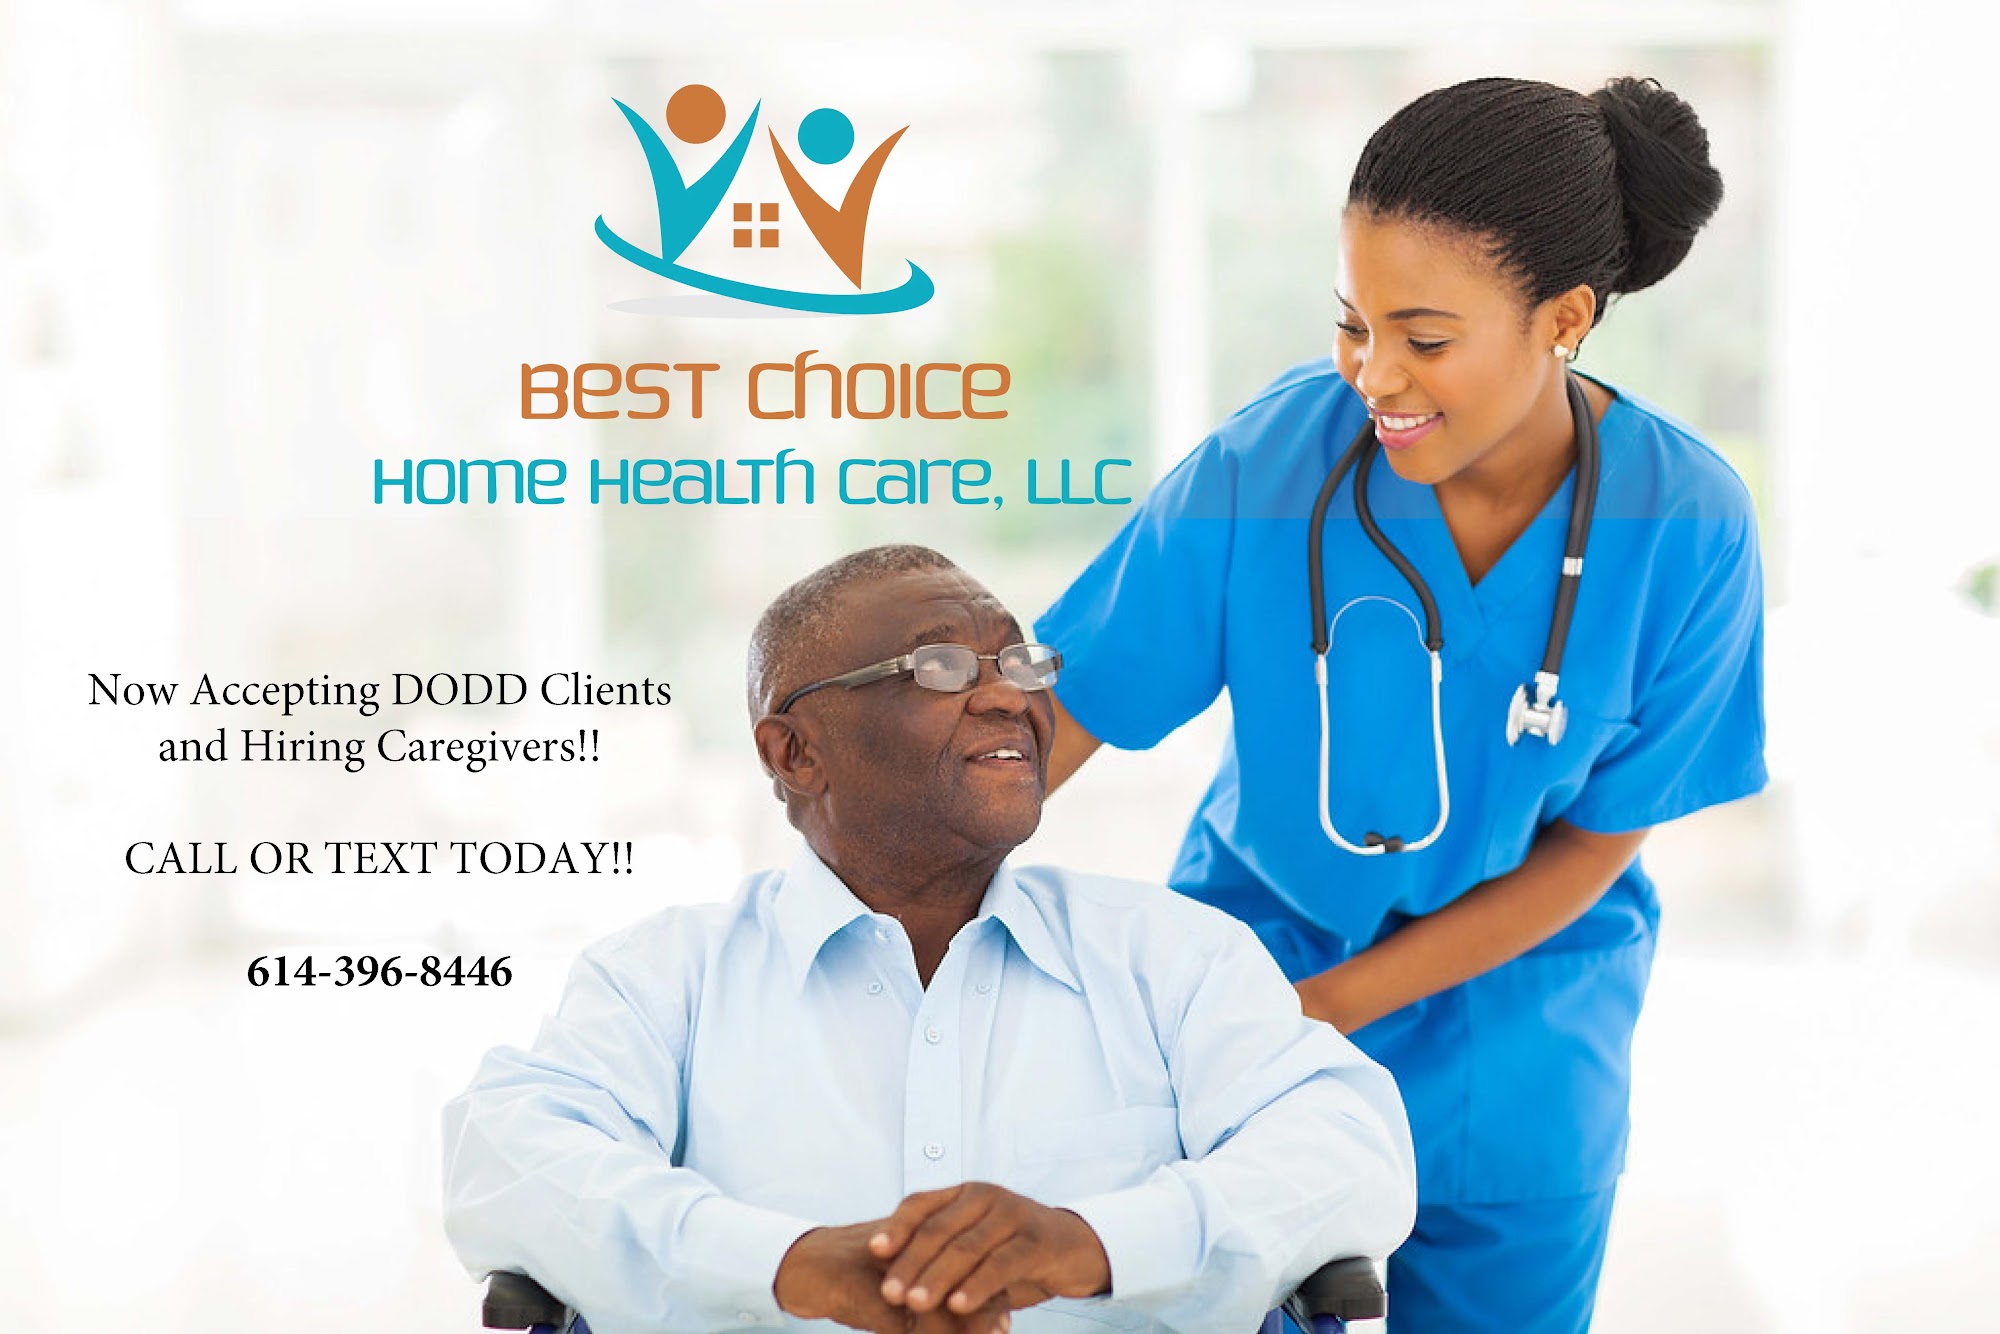 Best Choice Home Health Care, LLC